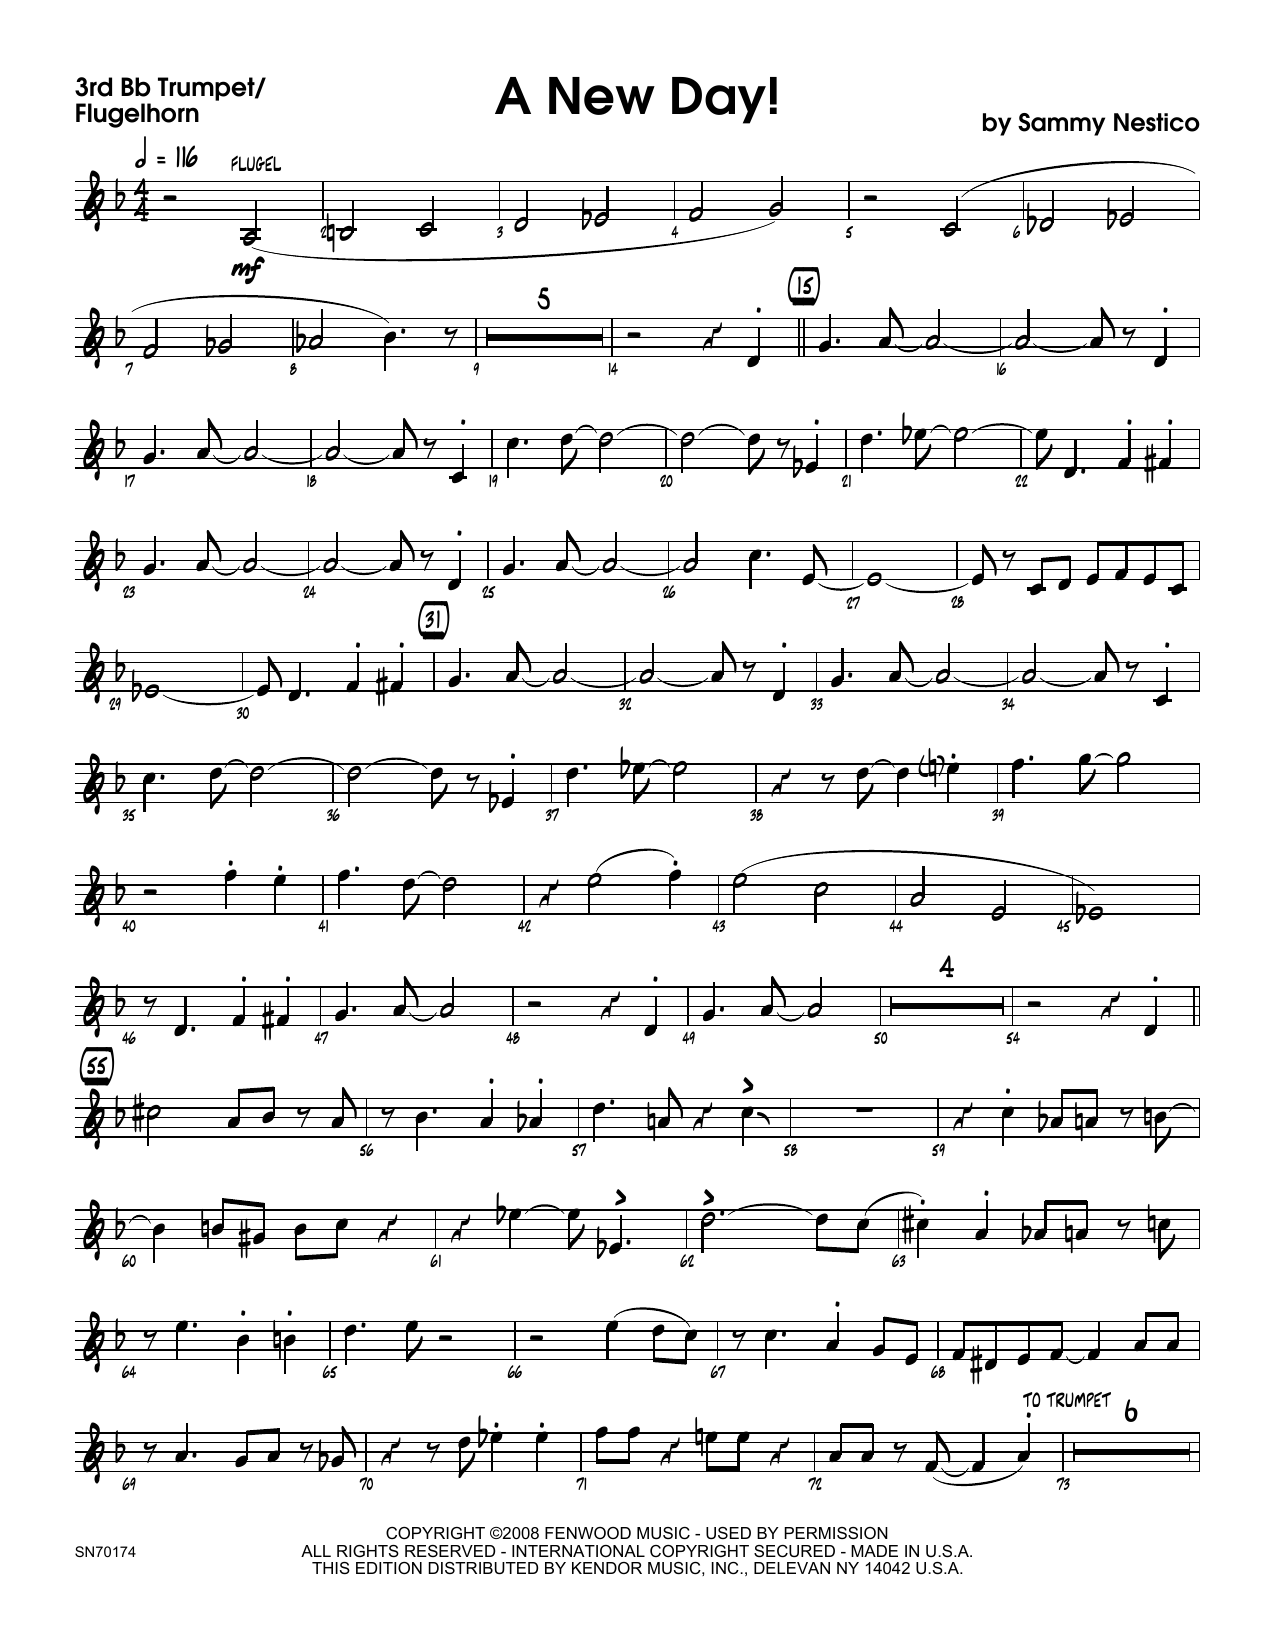 Download Sammy Nestico A New Day! - 3rd Bb Trumpet Sheet Music